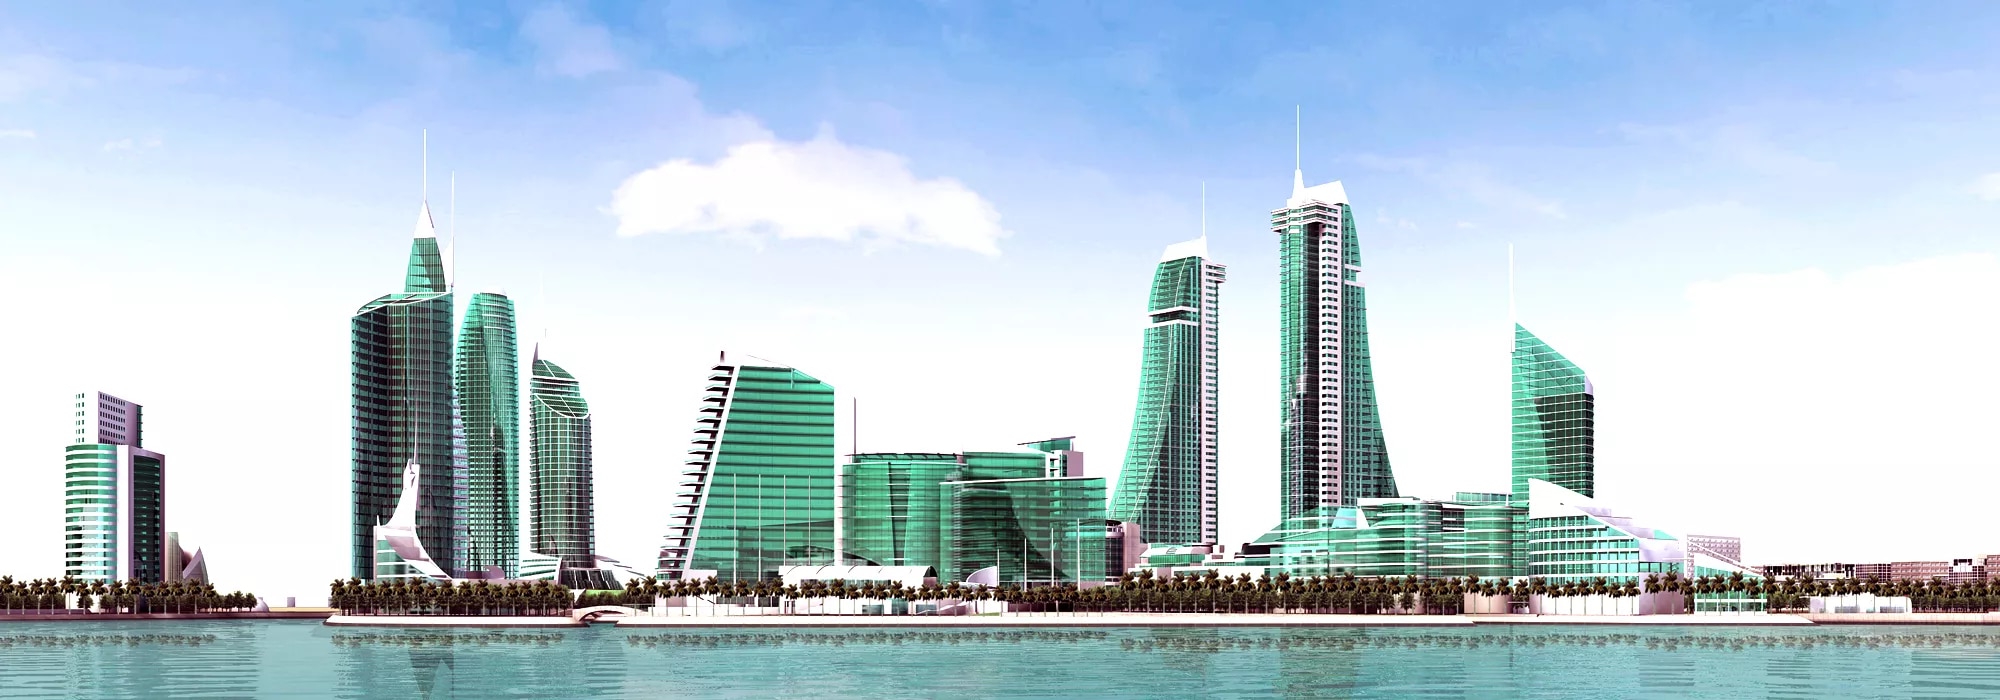 Bahrain Financial Harbour - Meeting Rooms